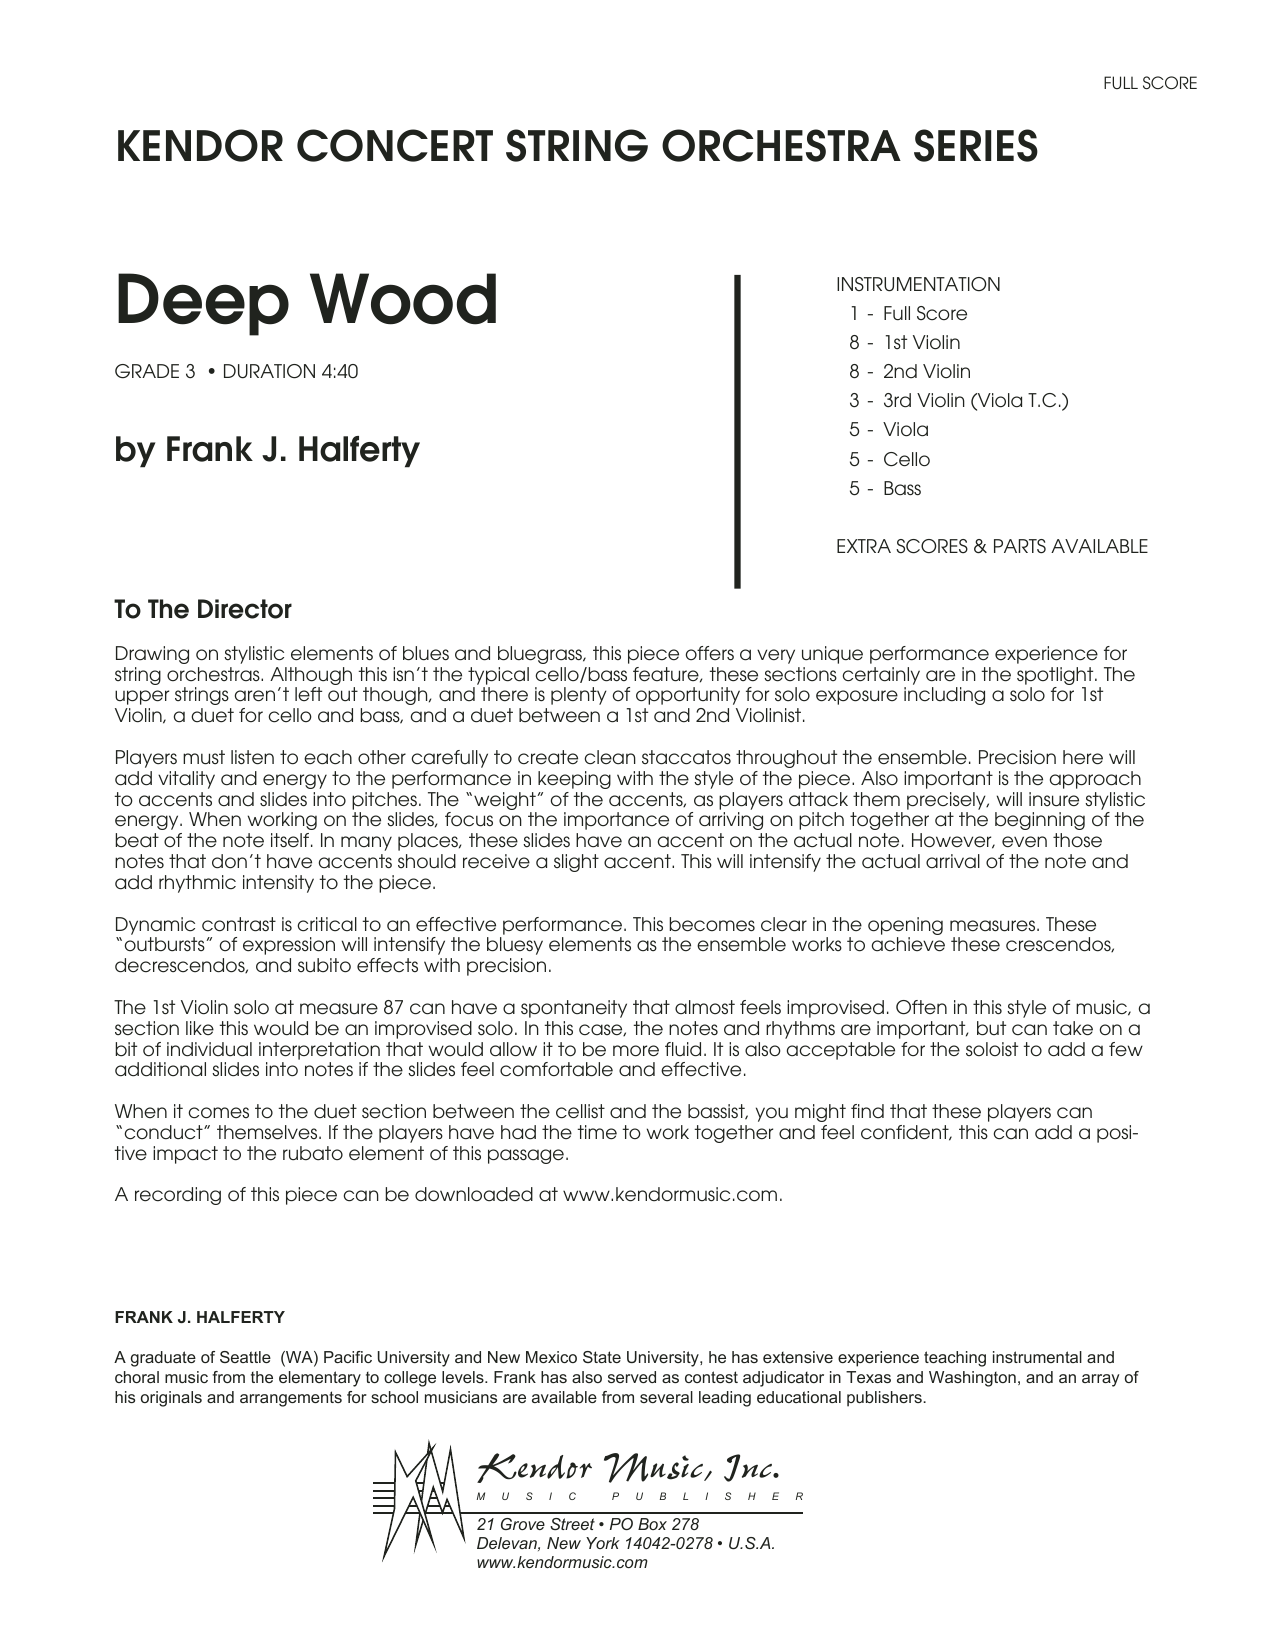 Download Frank J. Halferty Deep Wood - Full Score Sheet Music